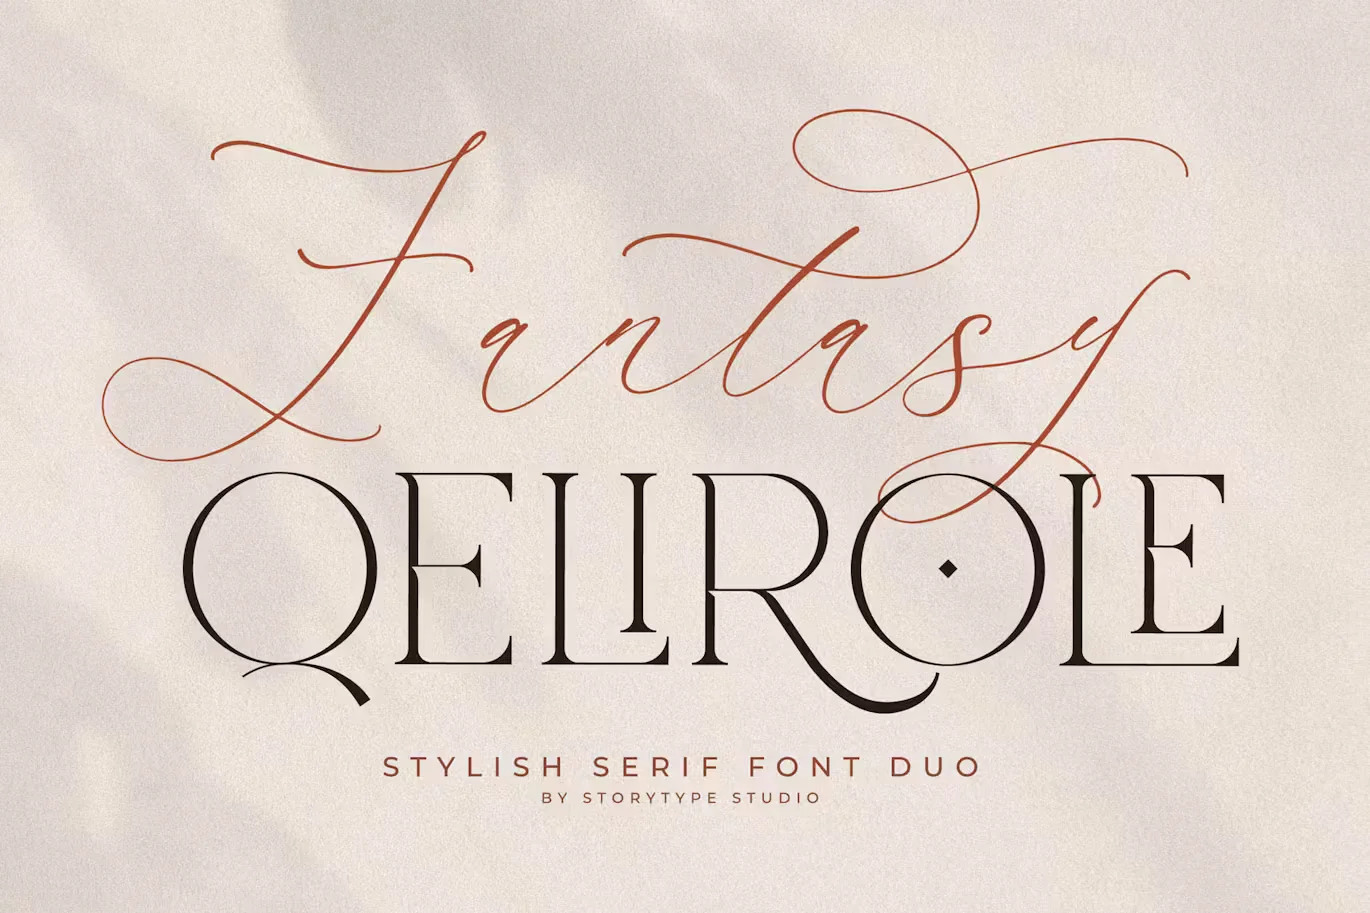 Fantasy Qelirole Font Duo Stylish Serif Font